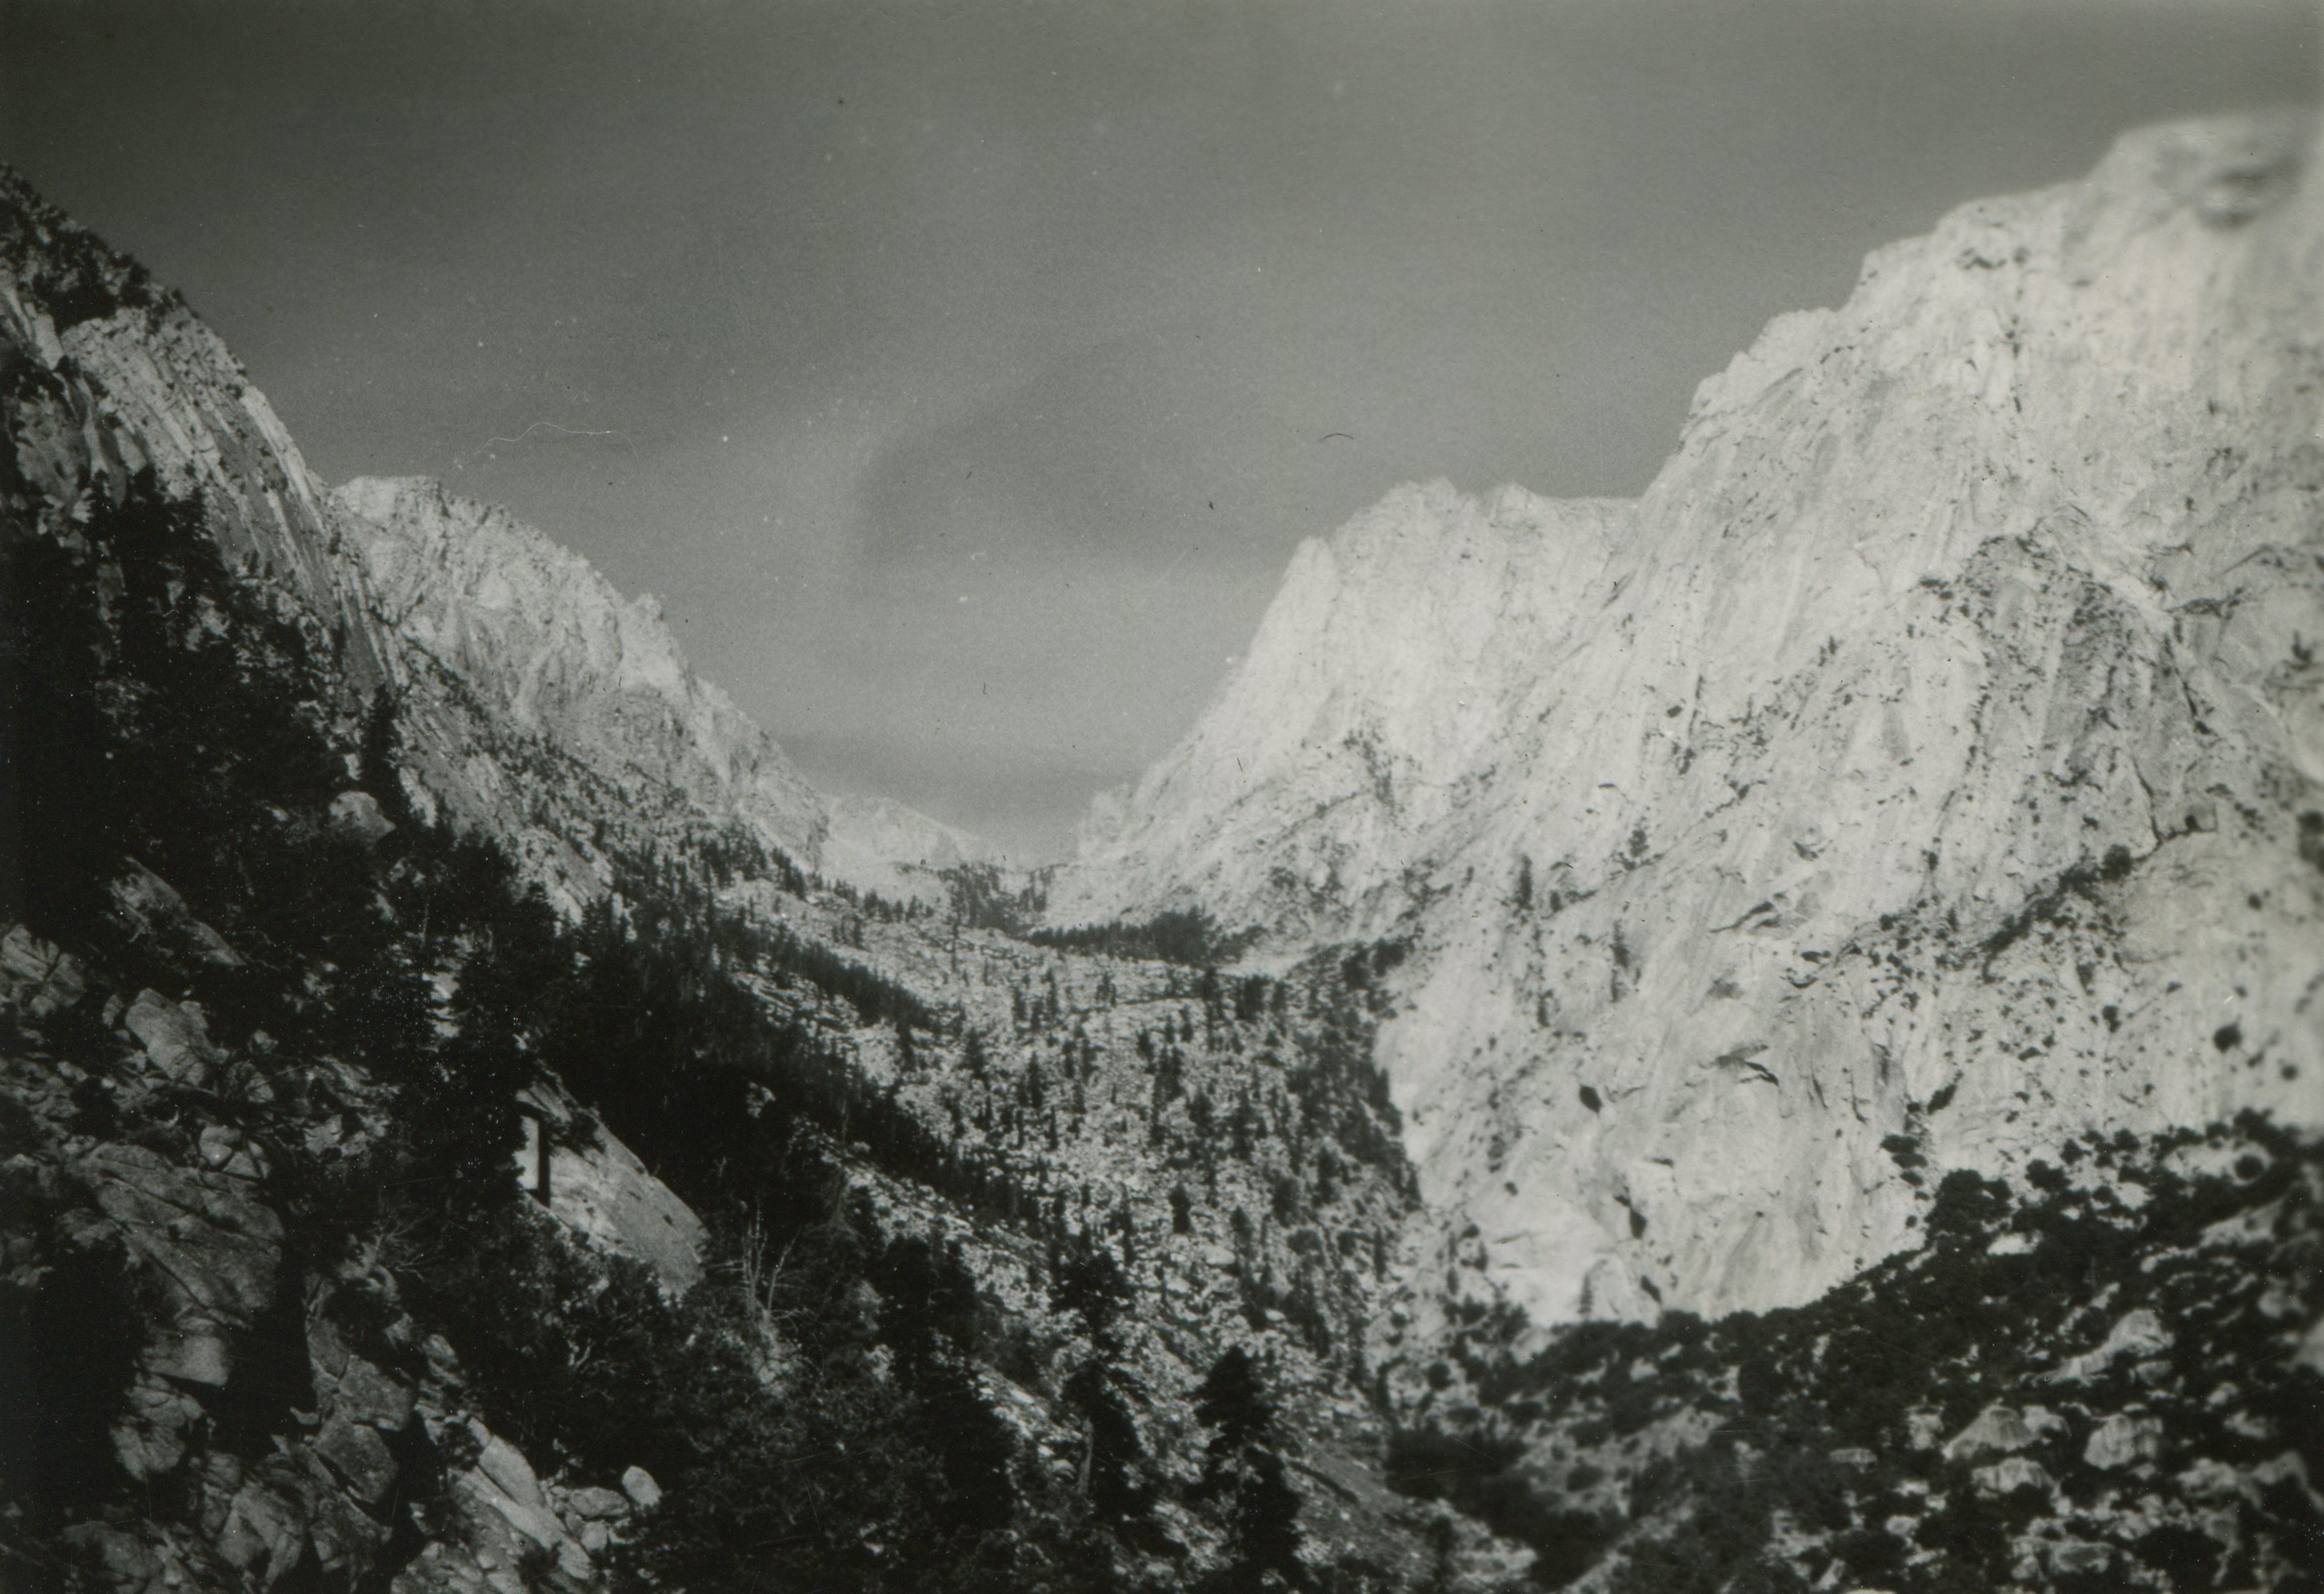 1949 Ashrama camp - a view of Tuttle Creek Canyon